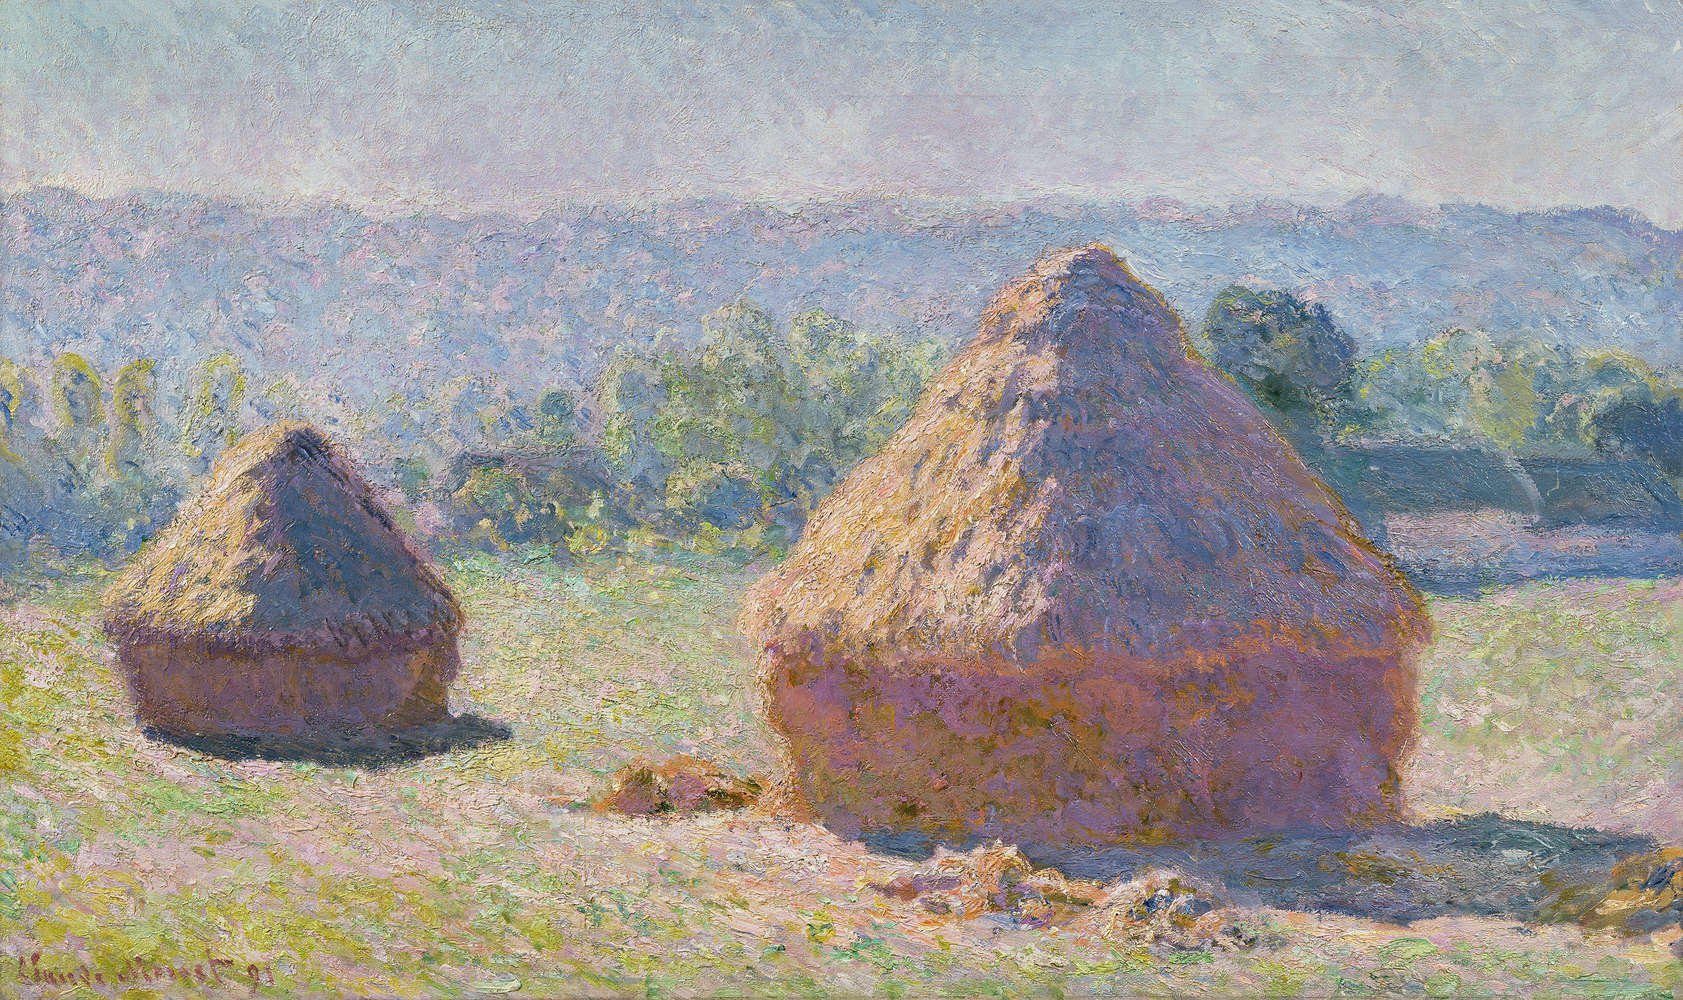             Fototapete "Stroh- Schober am Ende des Sommers" von Claude Monet
        